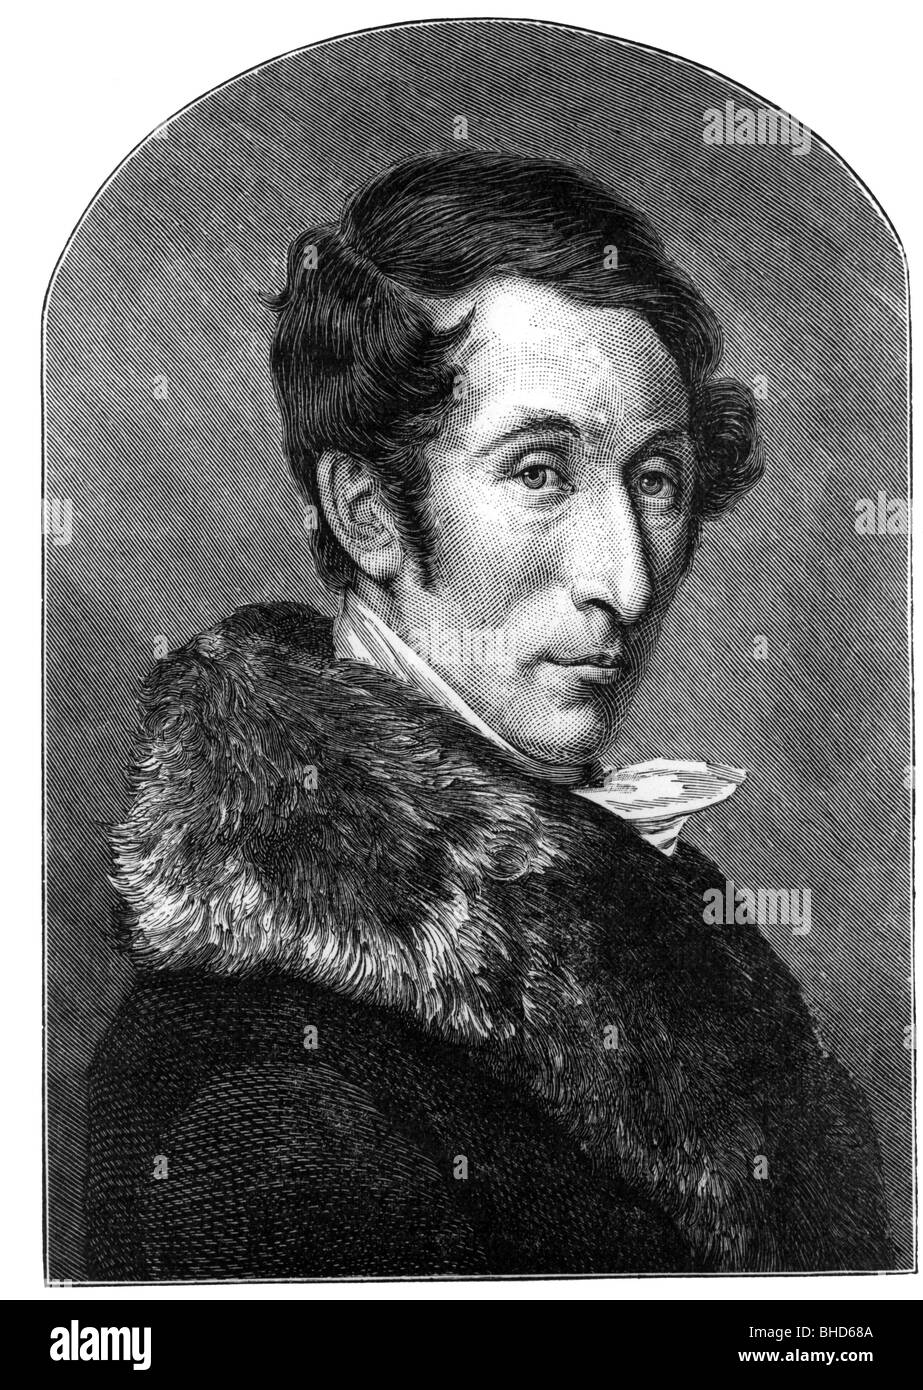 Weber, Carl Maria von, 18.11.1786 - 5.6.1826, German composer, portrait, wood engraving, 19th century, Stock Photo